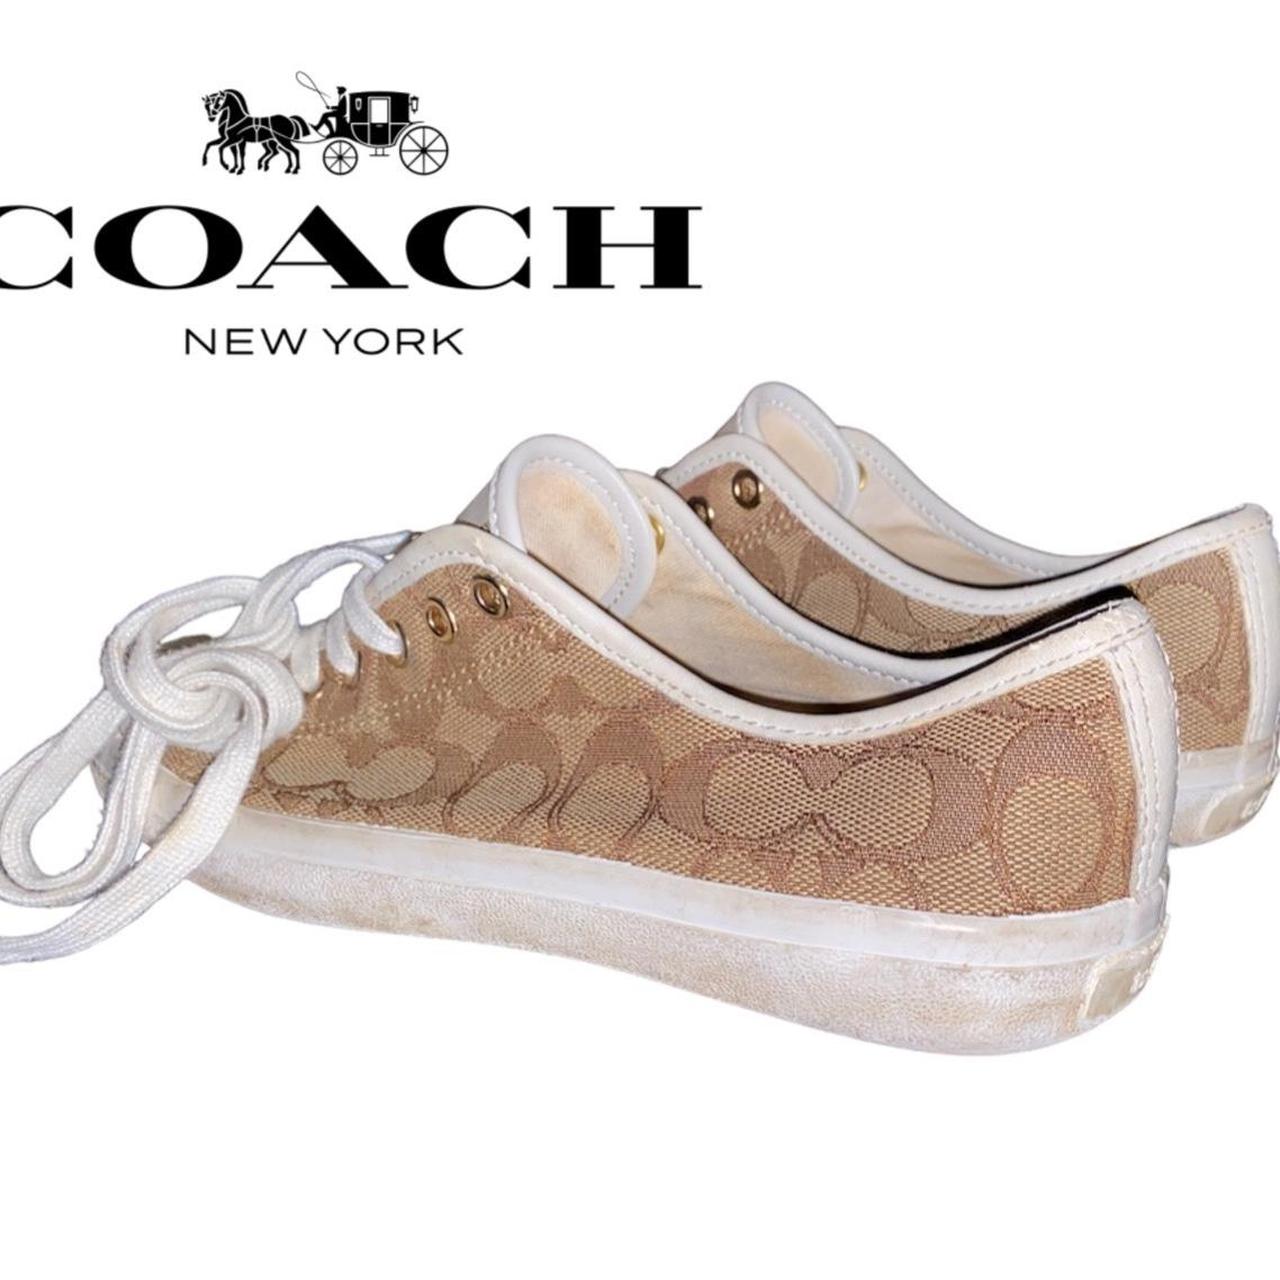 Coach 34A00248 Empire Monogram Fashion Sneakers for Women - Khaki price  from souq in Saudi Arabia - Yaoota!